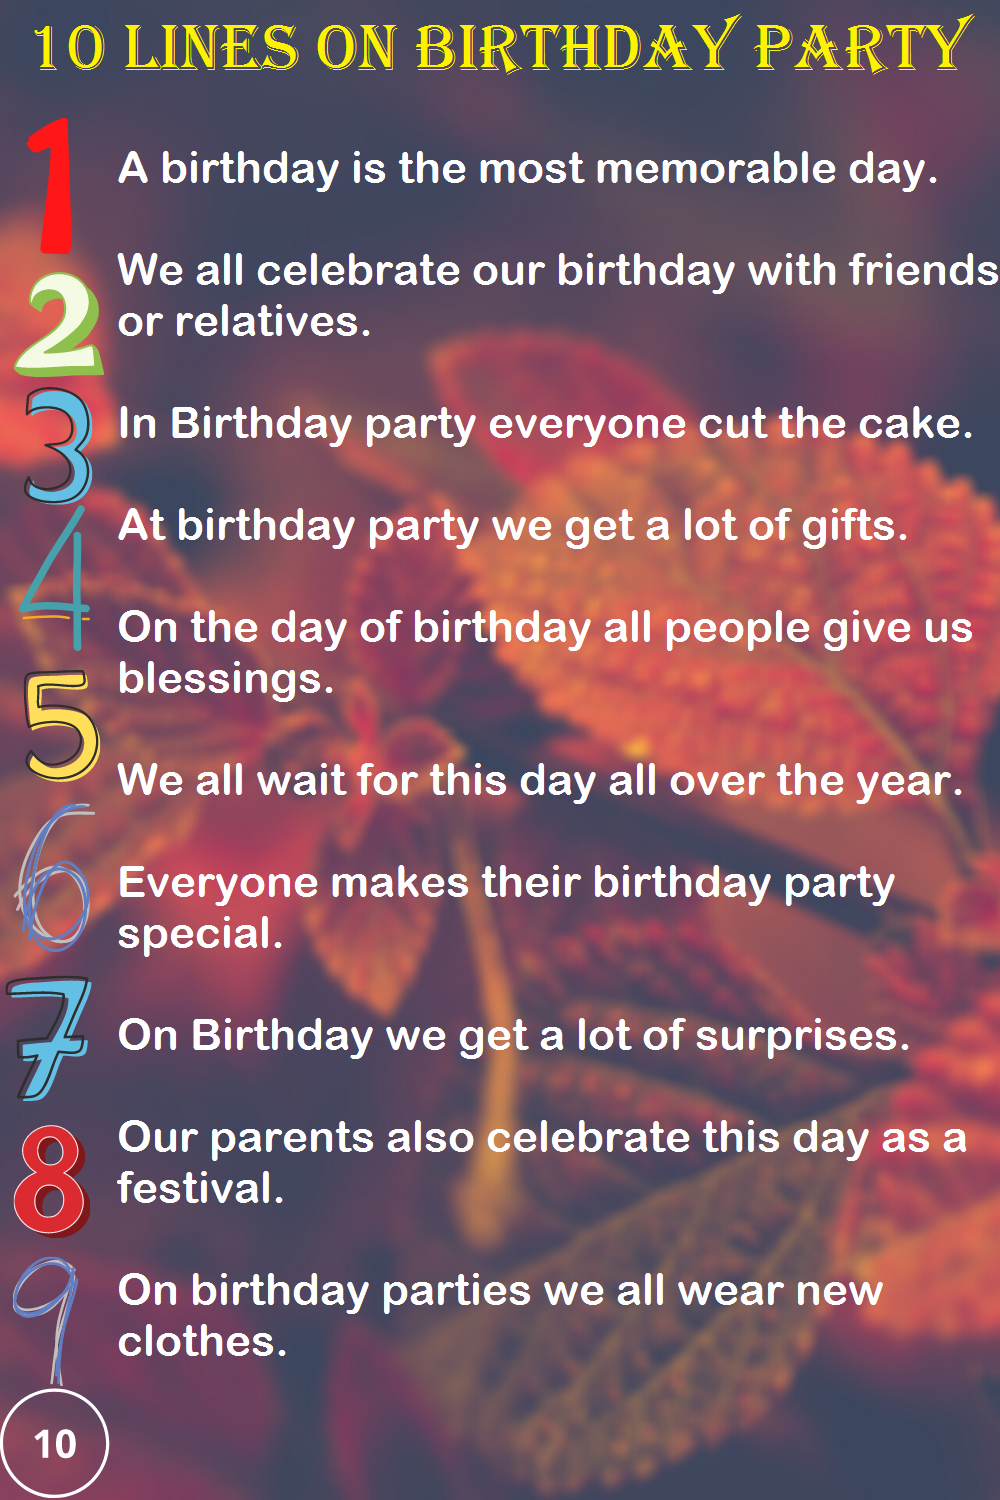 birthday party essay points